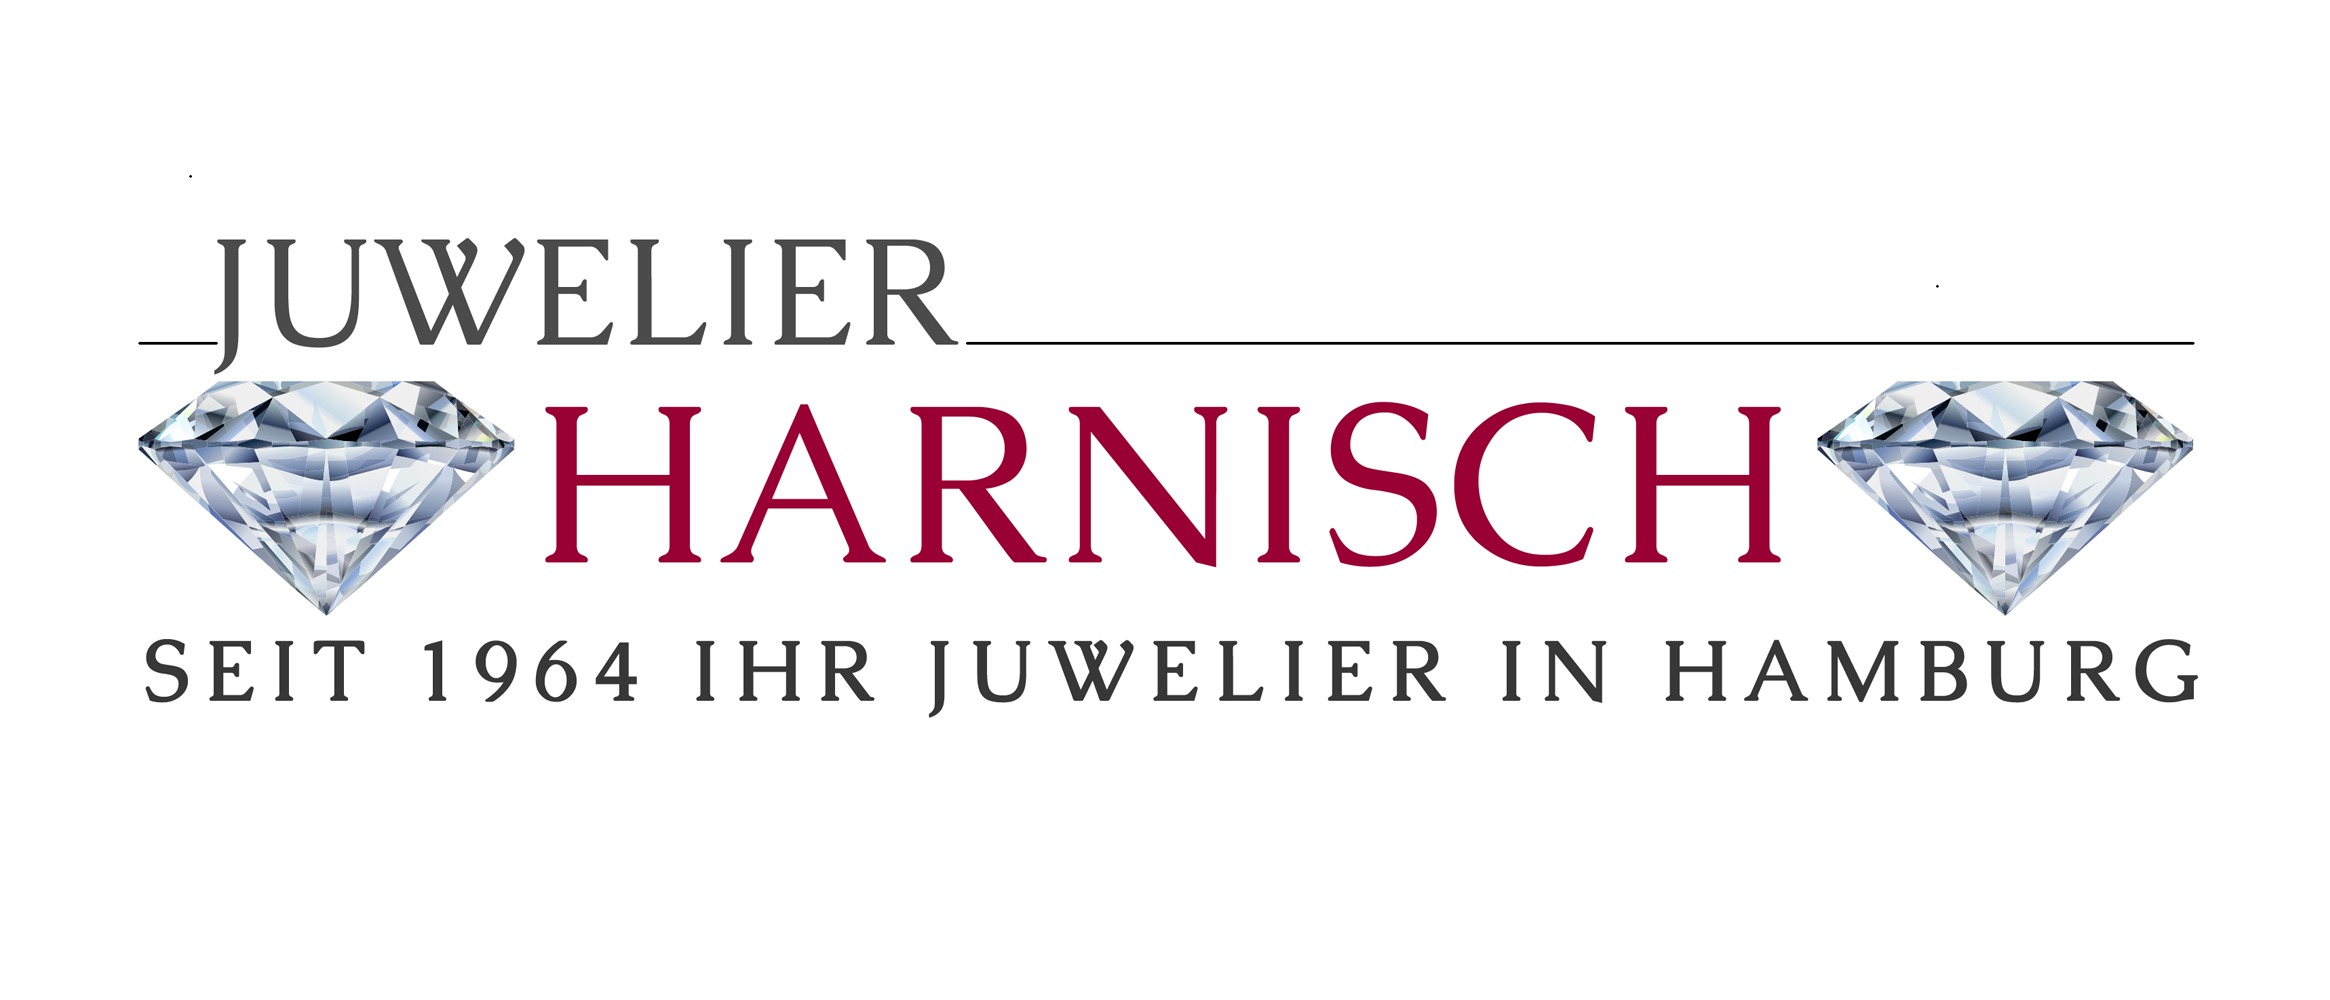 Juwelier Harnisch